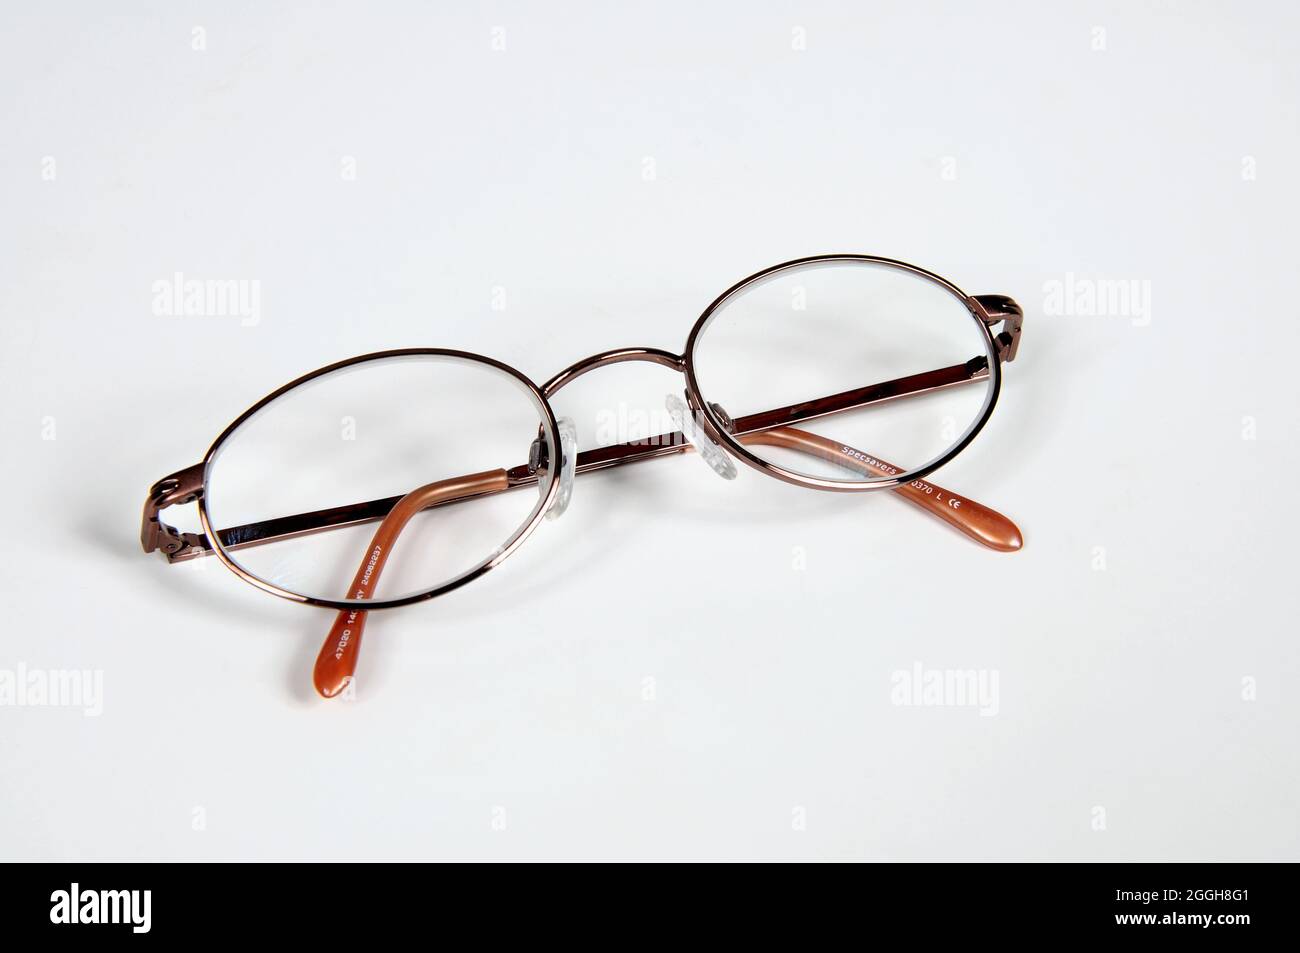 Women's glasses against a plain background Stock Photo